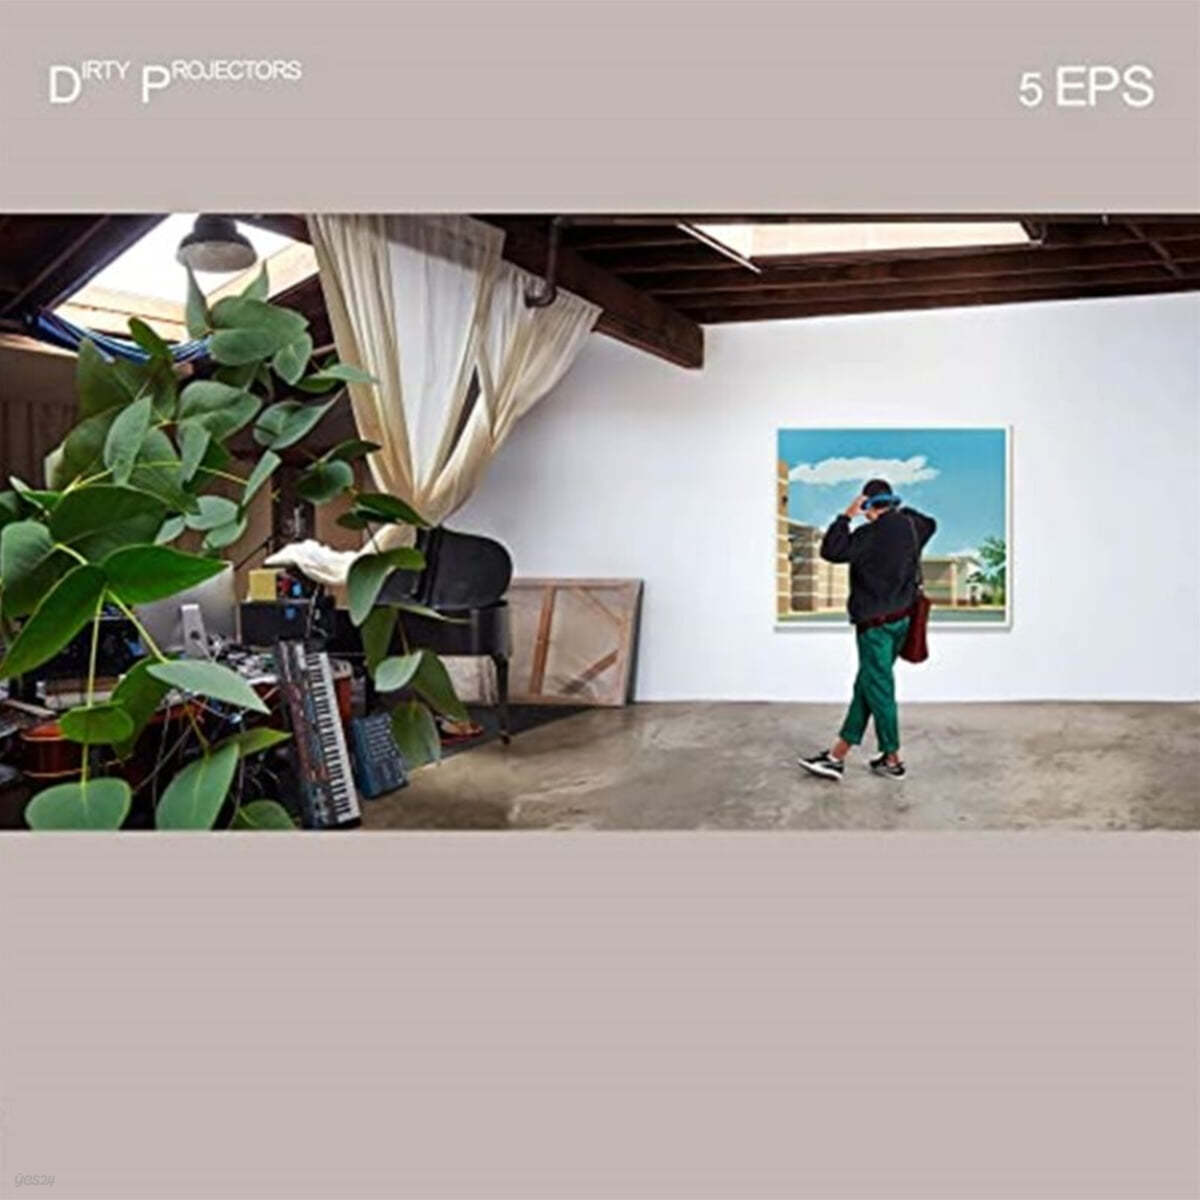 Dirty Projectors (더티 프로젝터스) - 5EPS [2LP] 